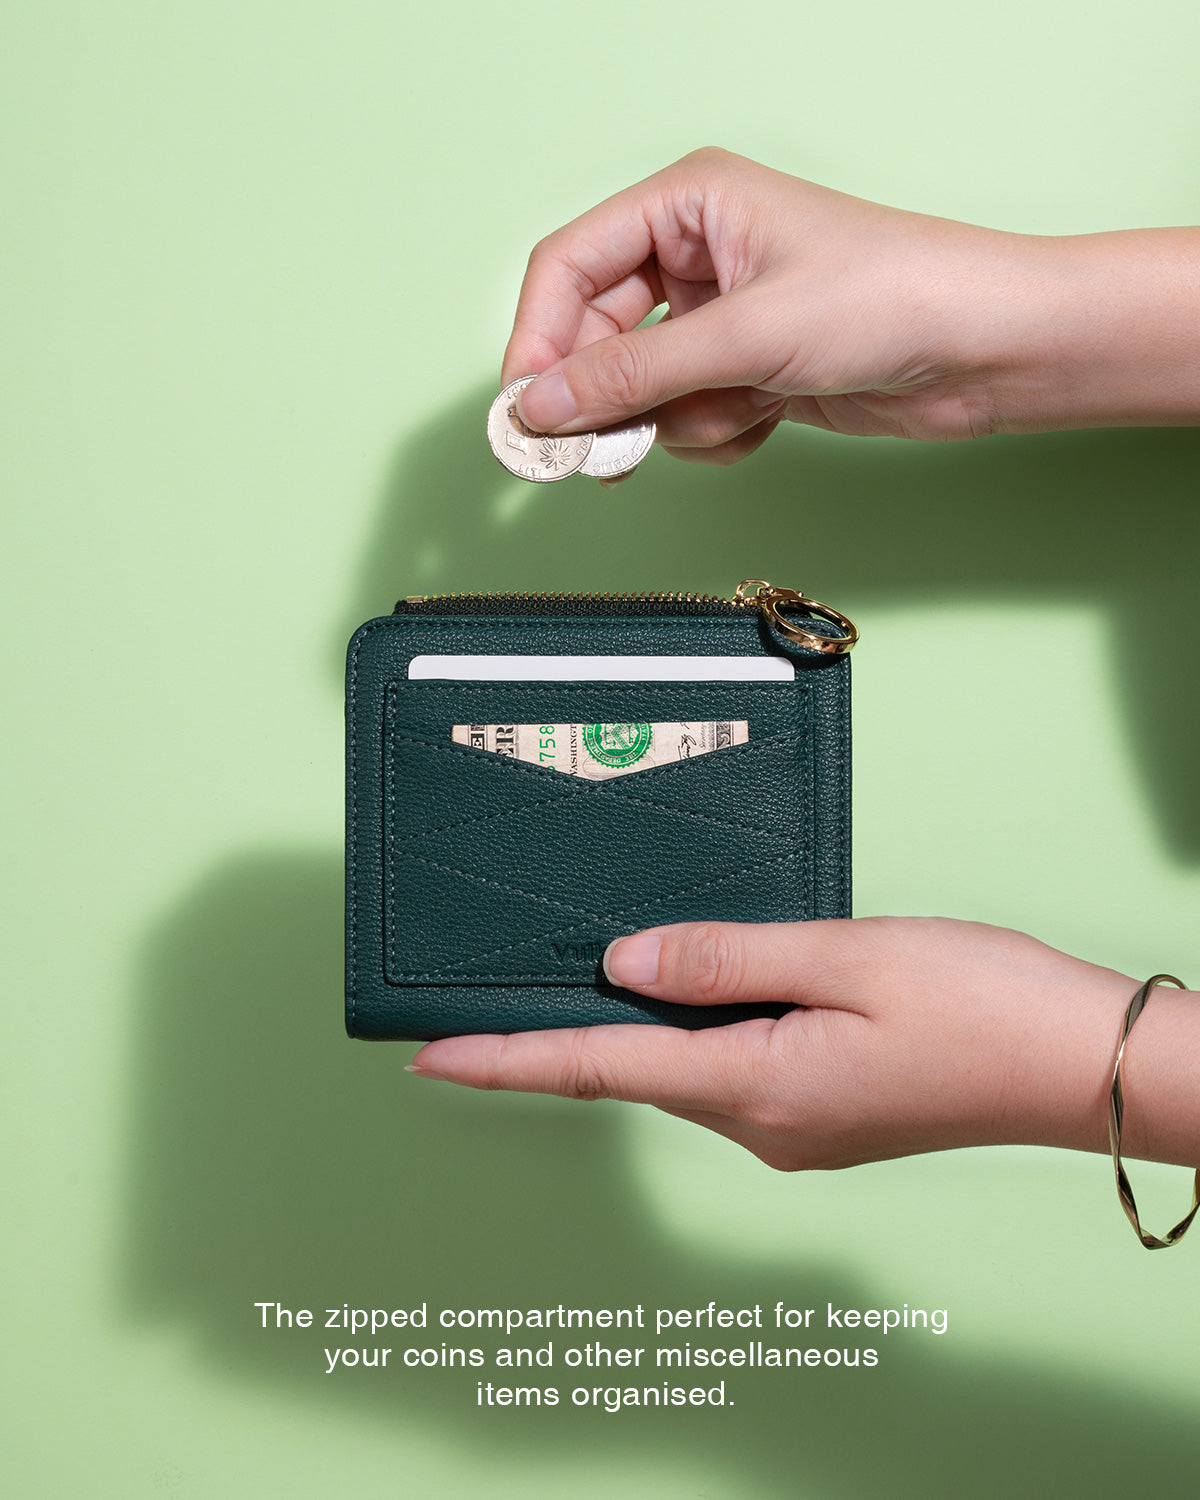 KW105- Women Bifold Small Compact Wallets with Zipper Pocket & ID Window KW105-Pale-Pink